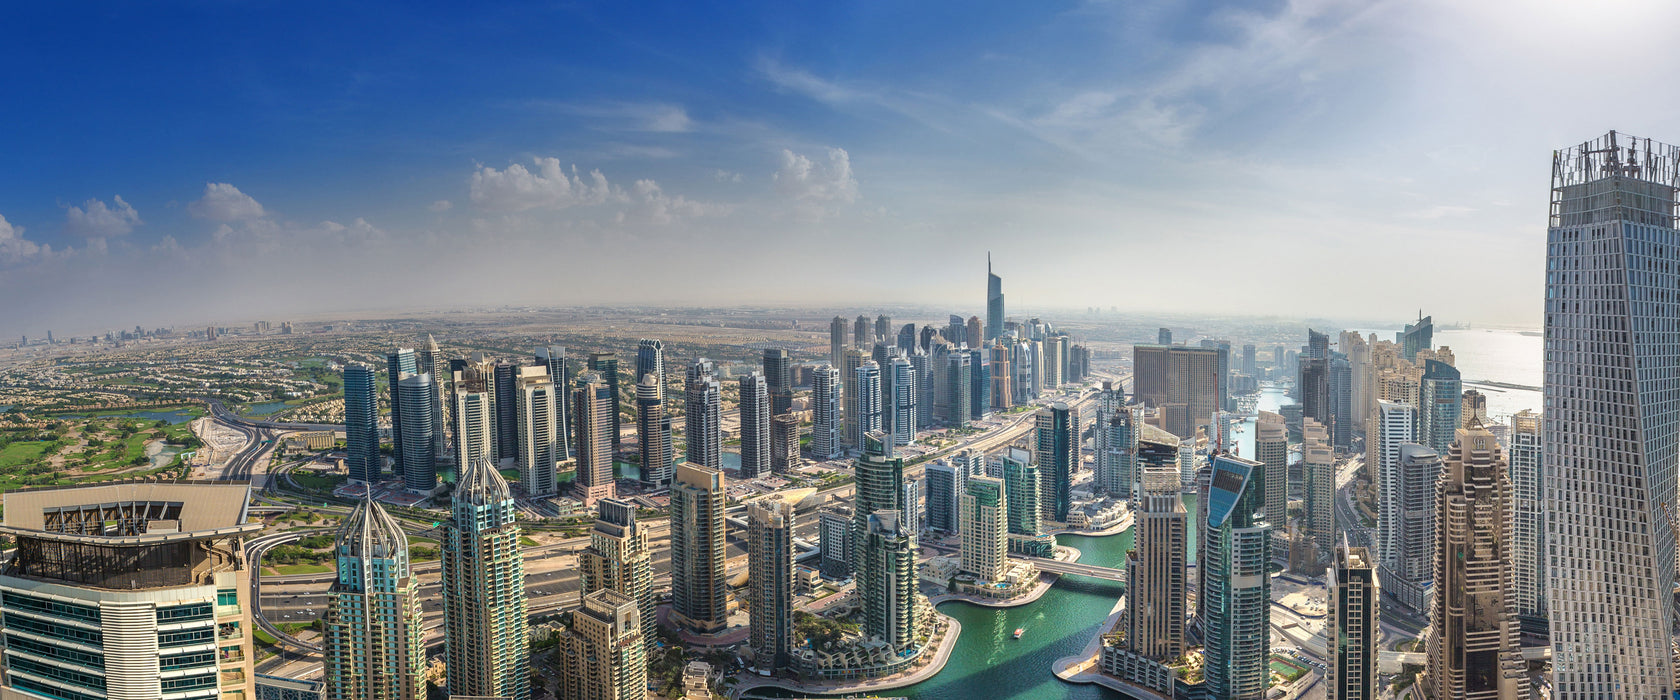 Dubai Hotel Burj al Arab, Glasbild Panorama